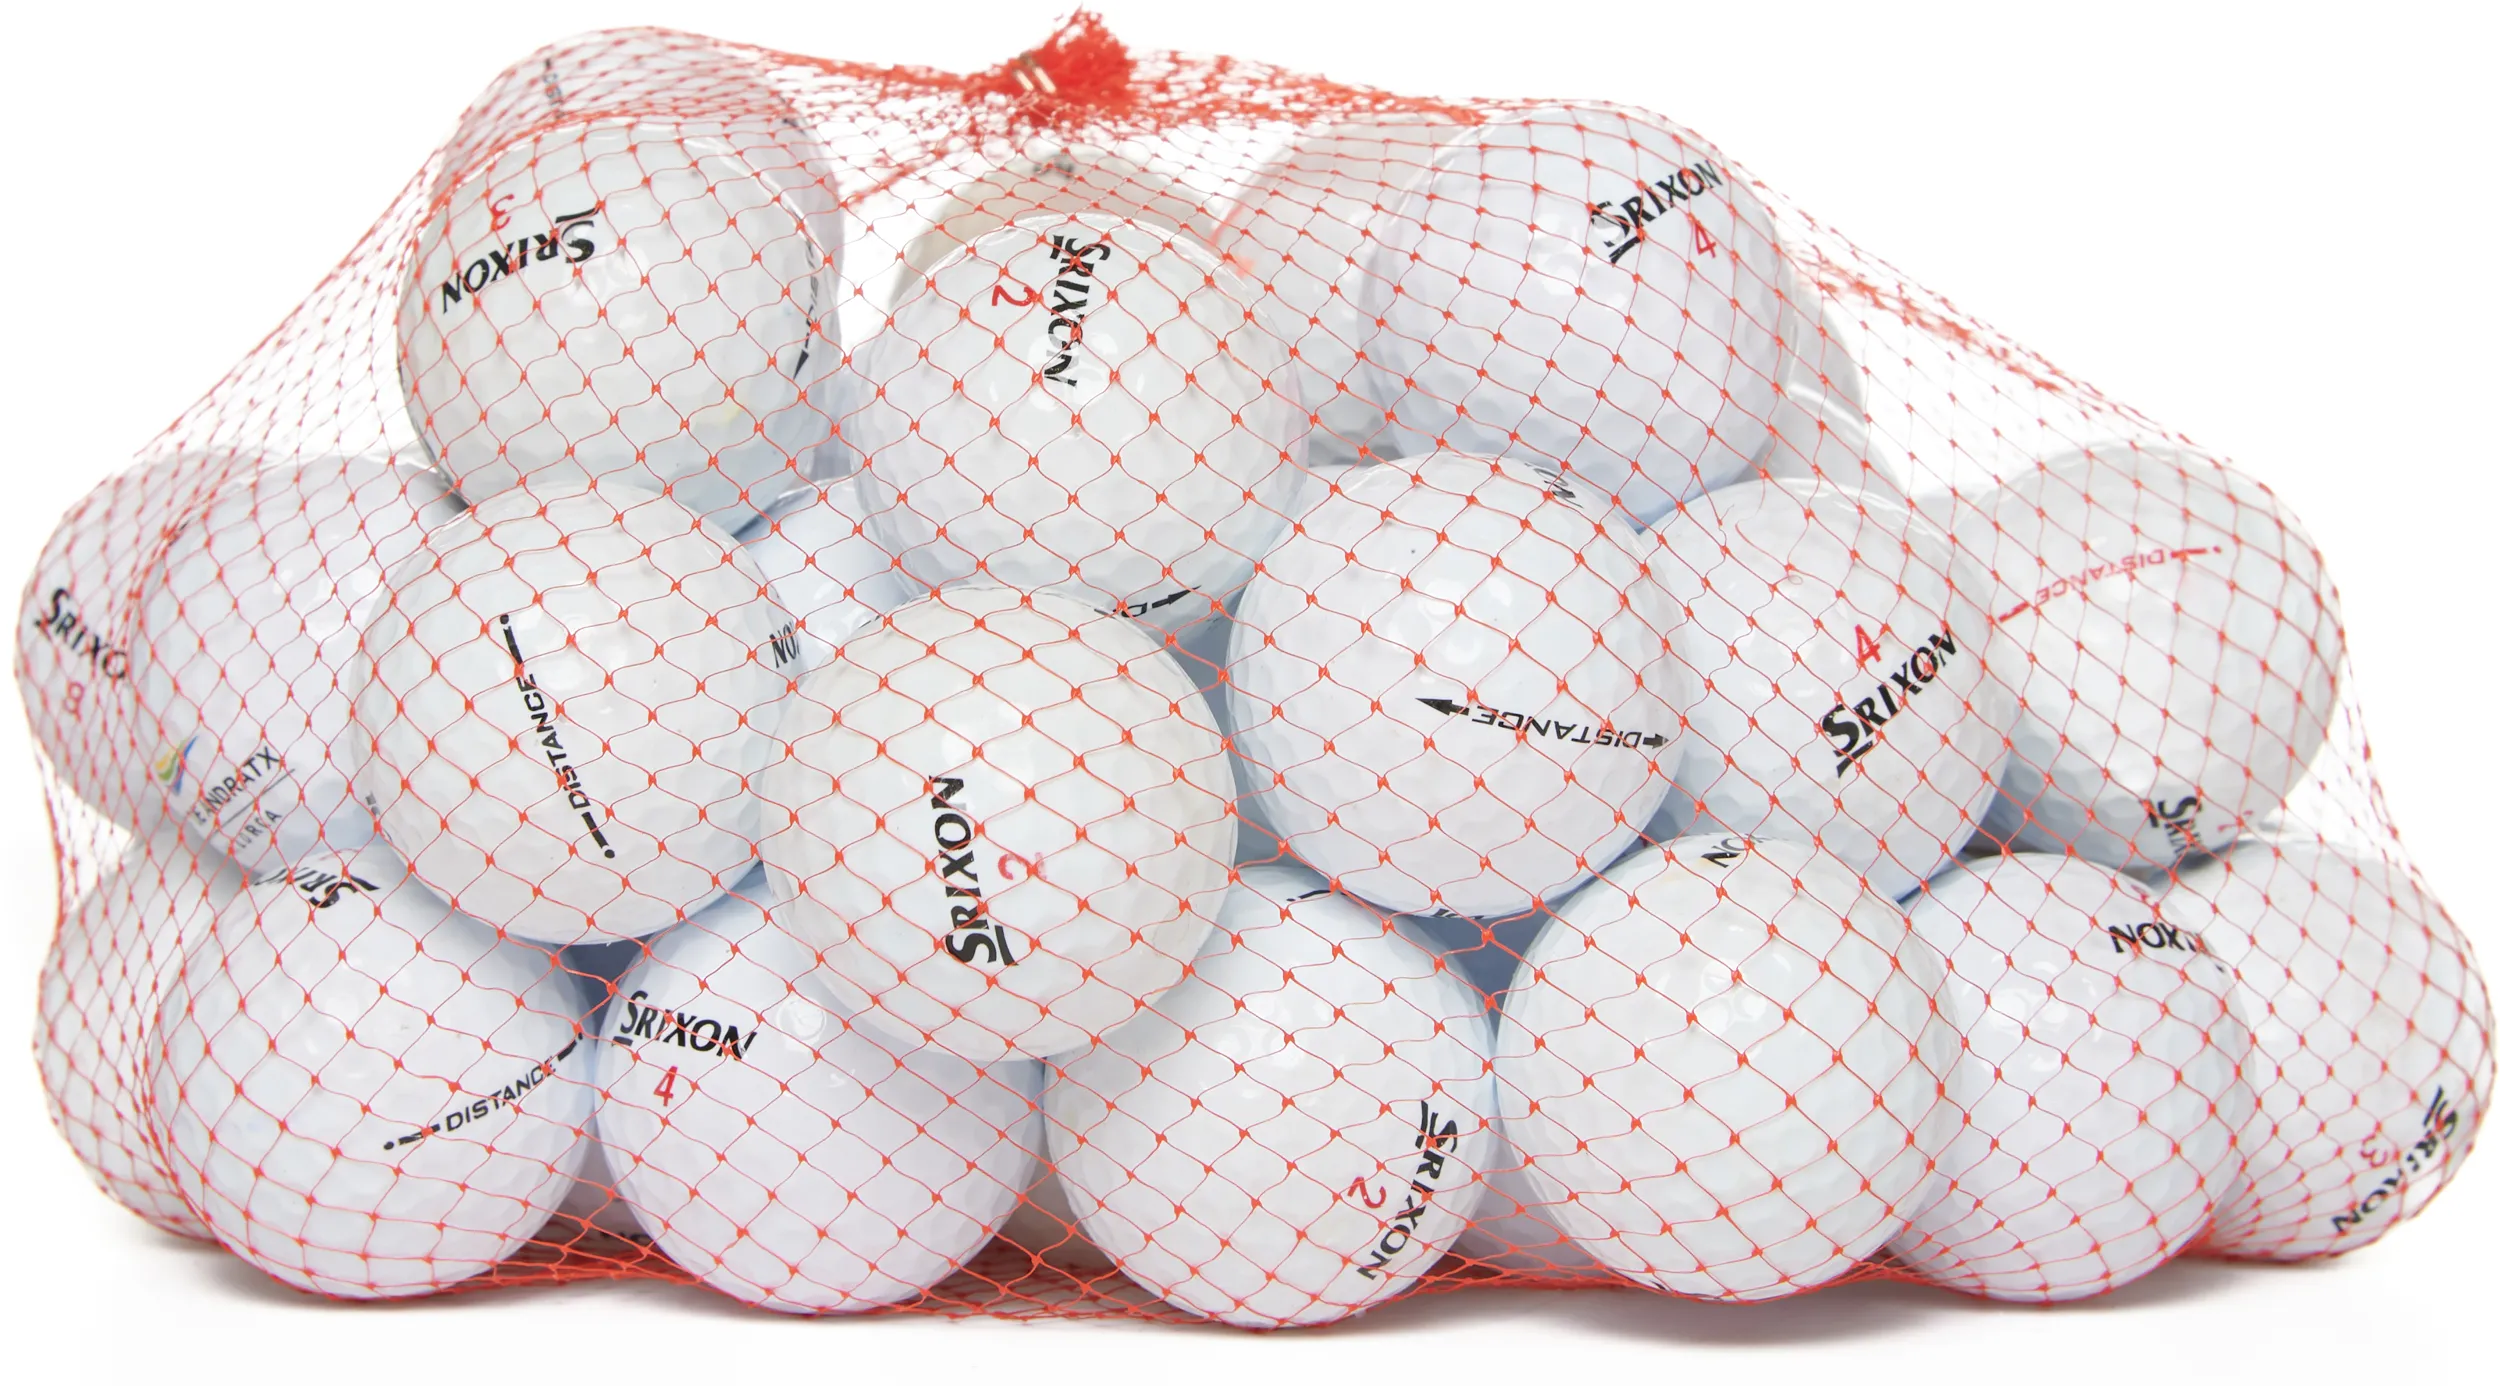 50 Srixon Distance Lakeballs